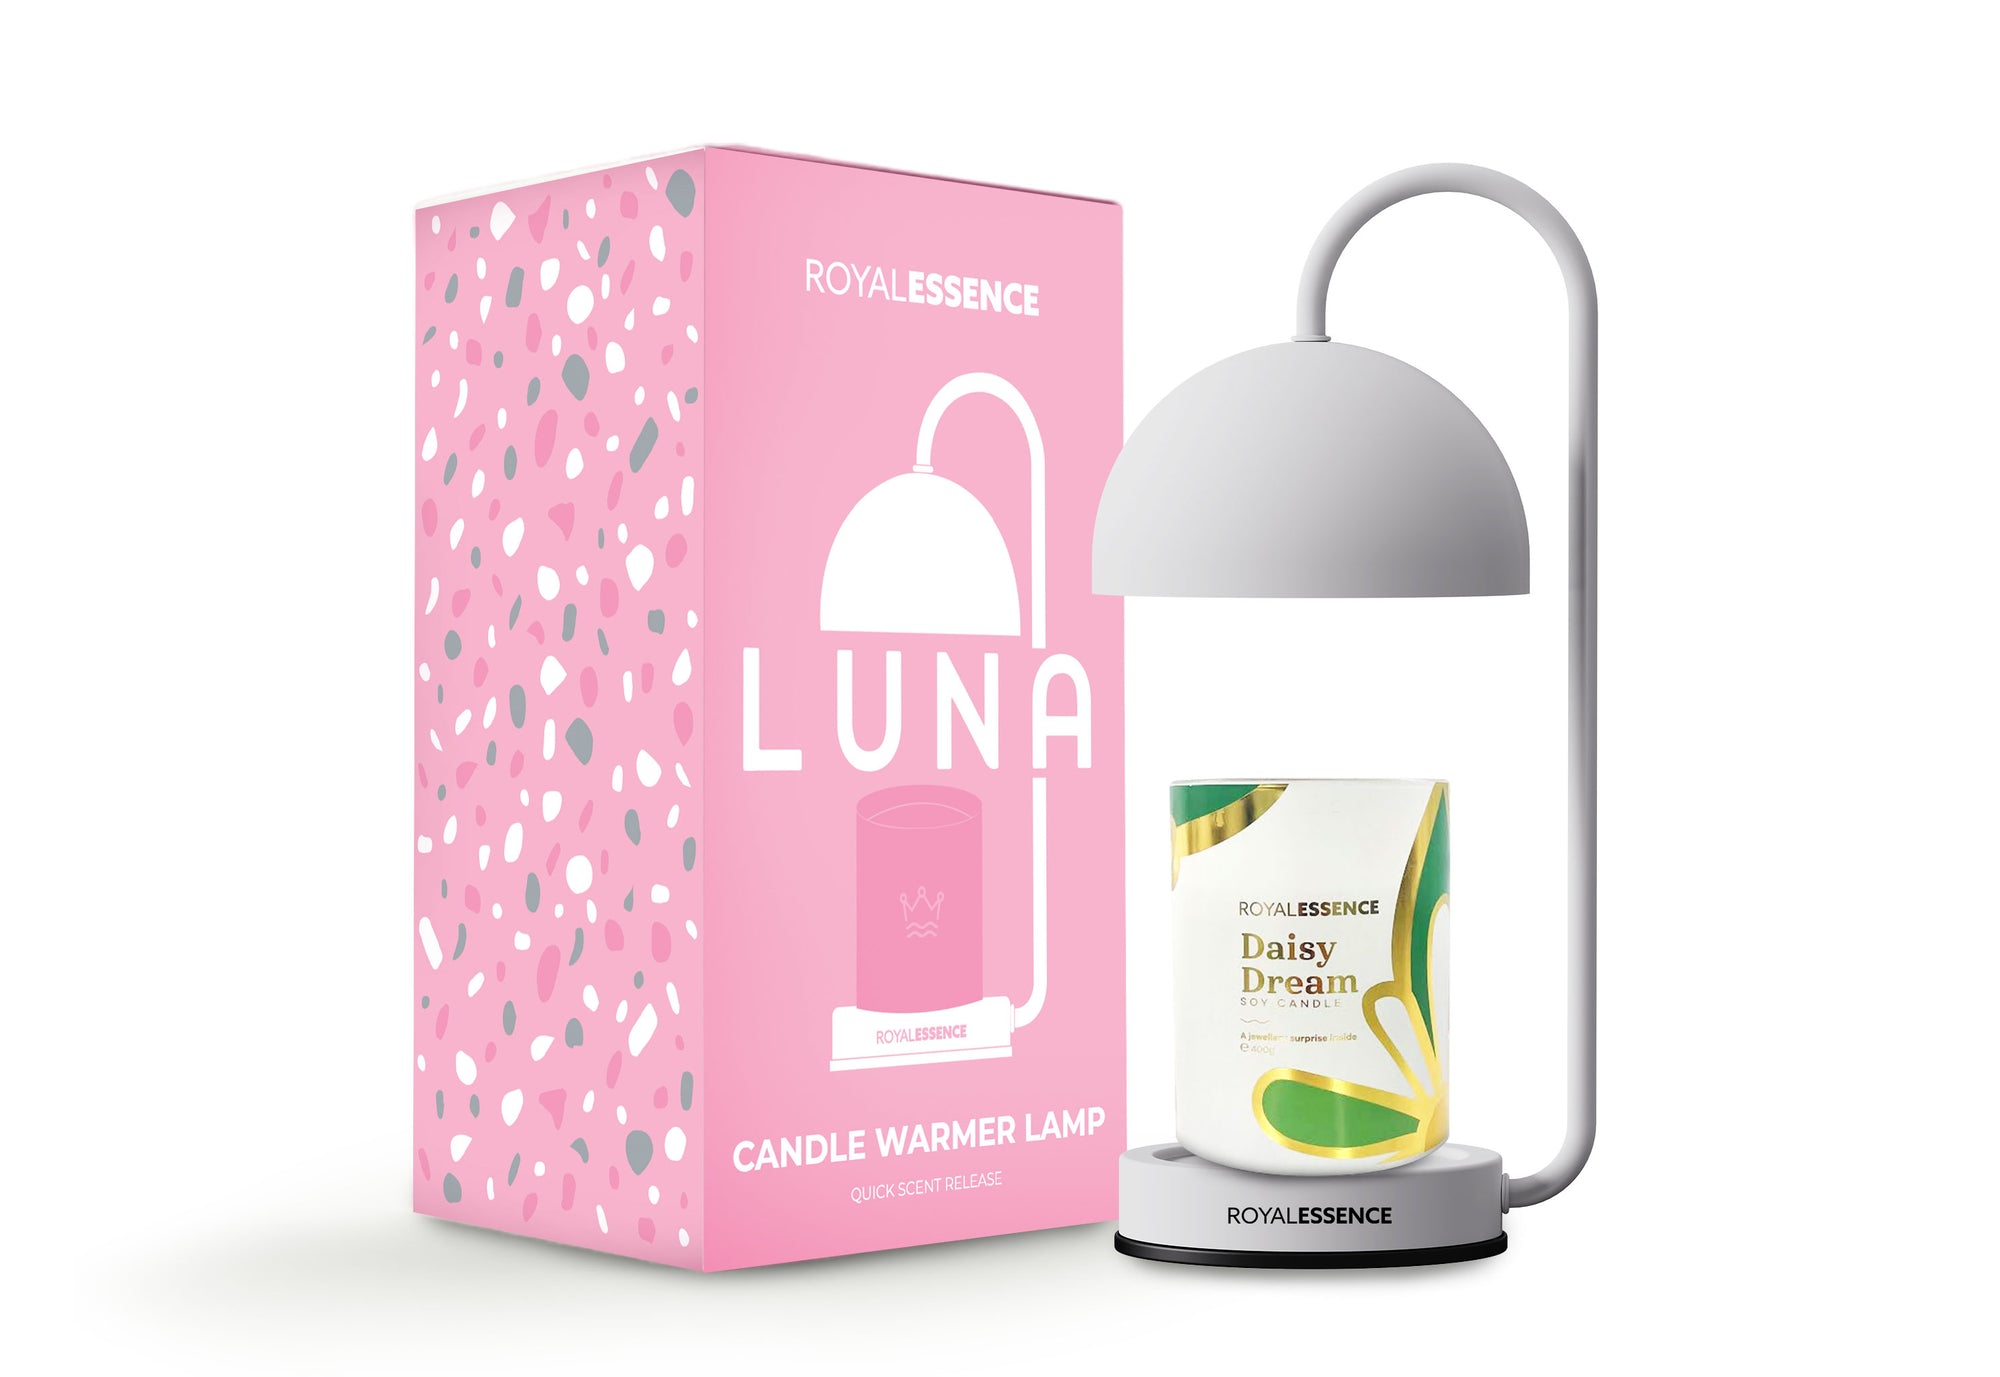 Luna Candle Warmer Lamp